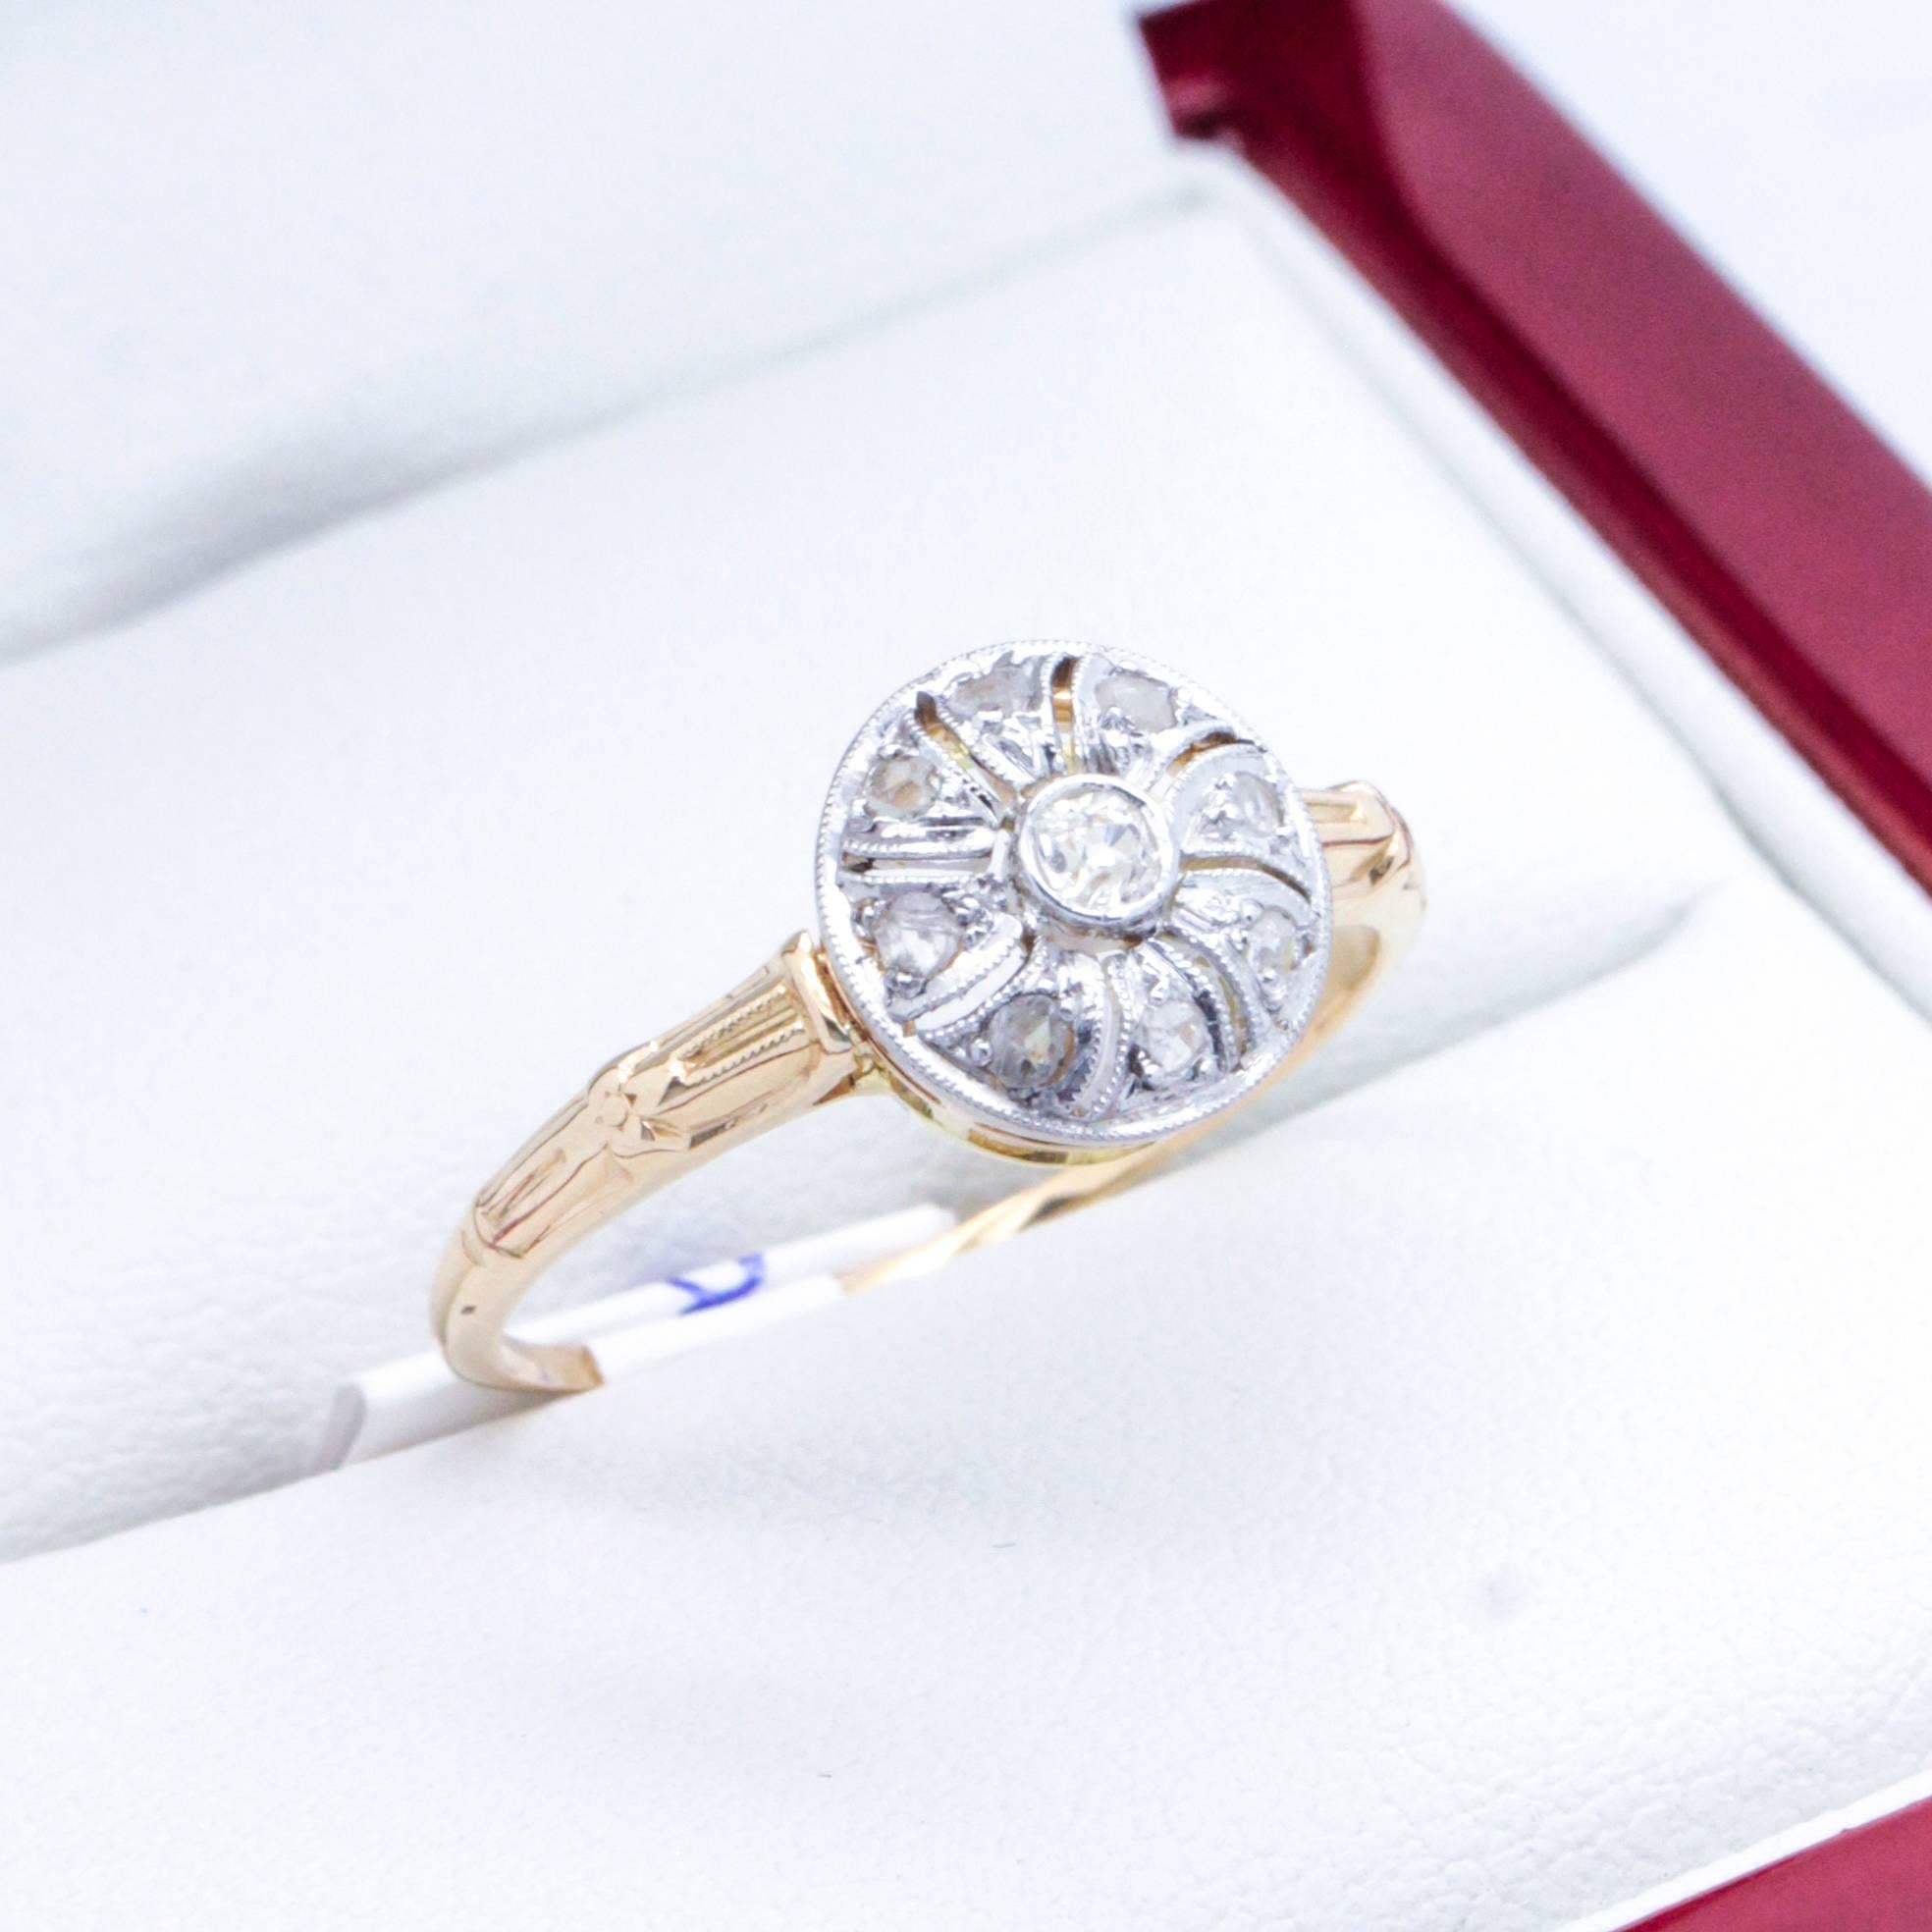 Handmade, Art Deco Pinwheel Diamond Ring In Excellent Condition For Sale In Sydney CBD, AU